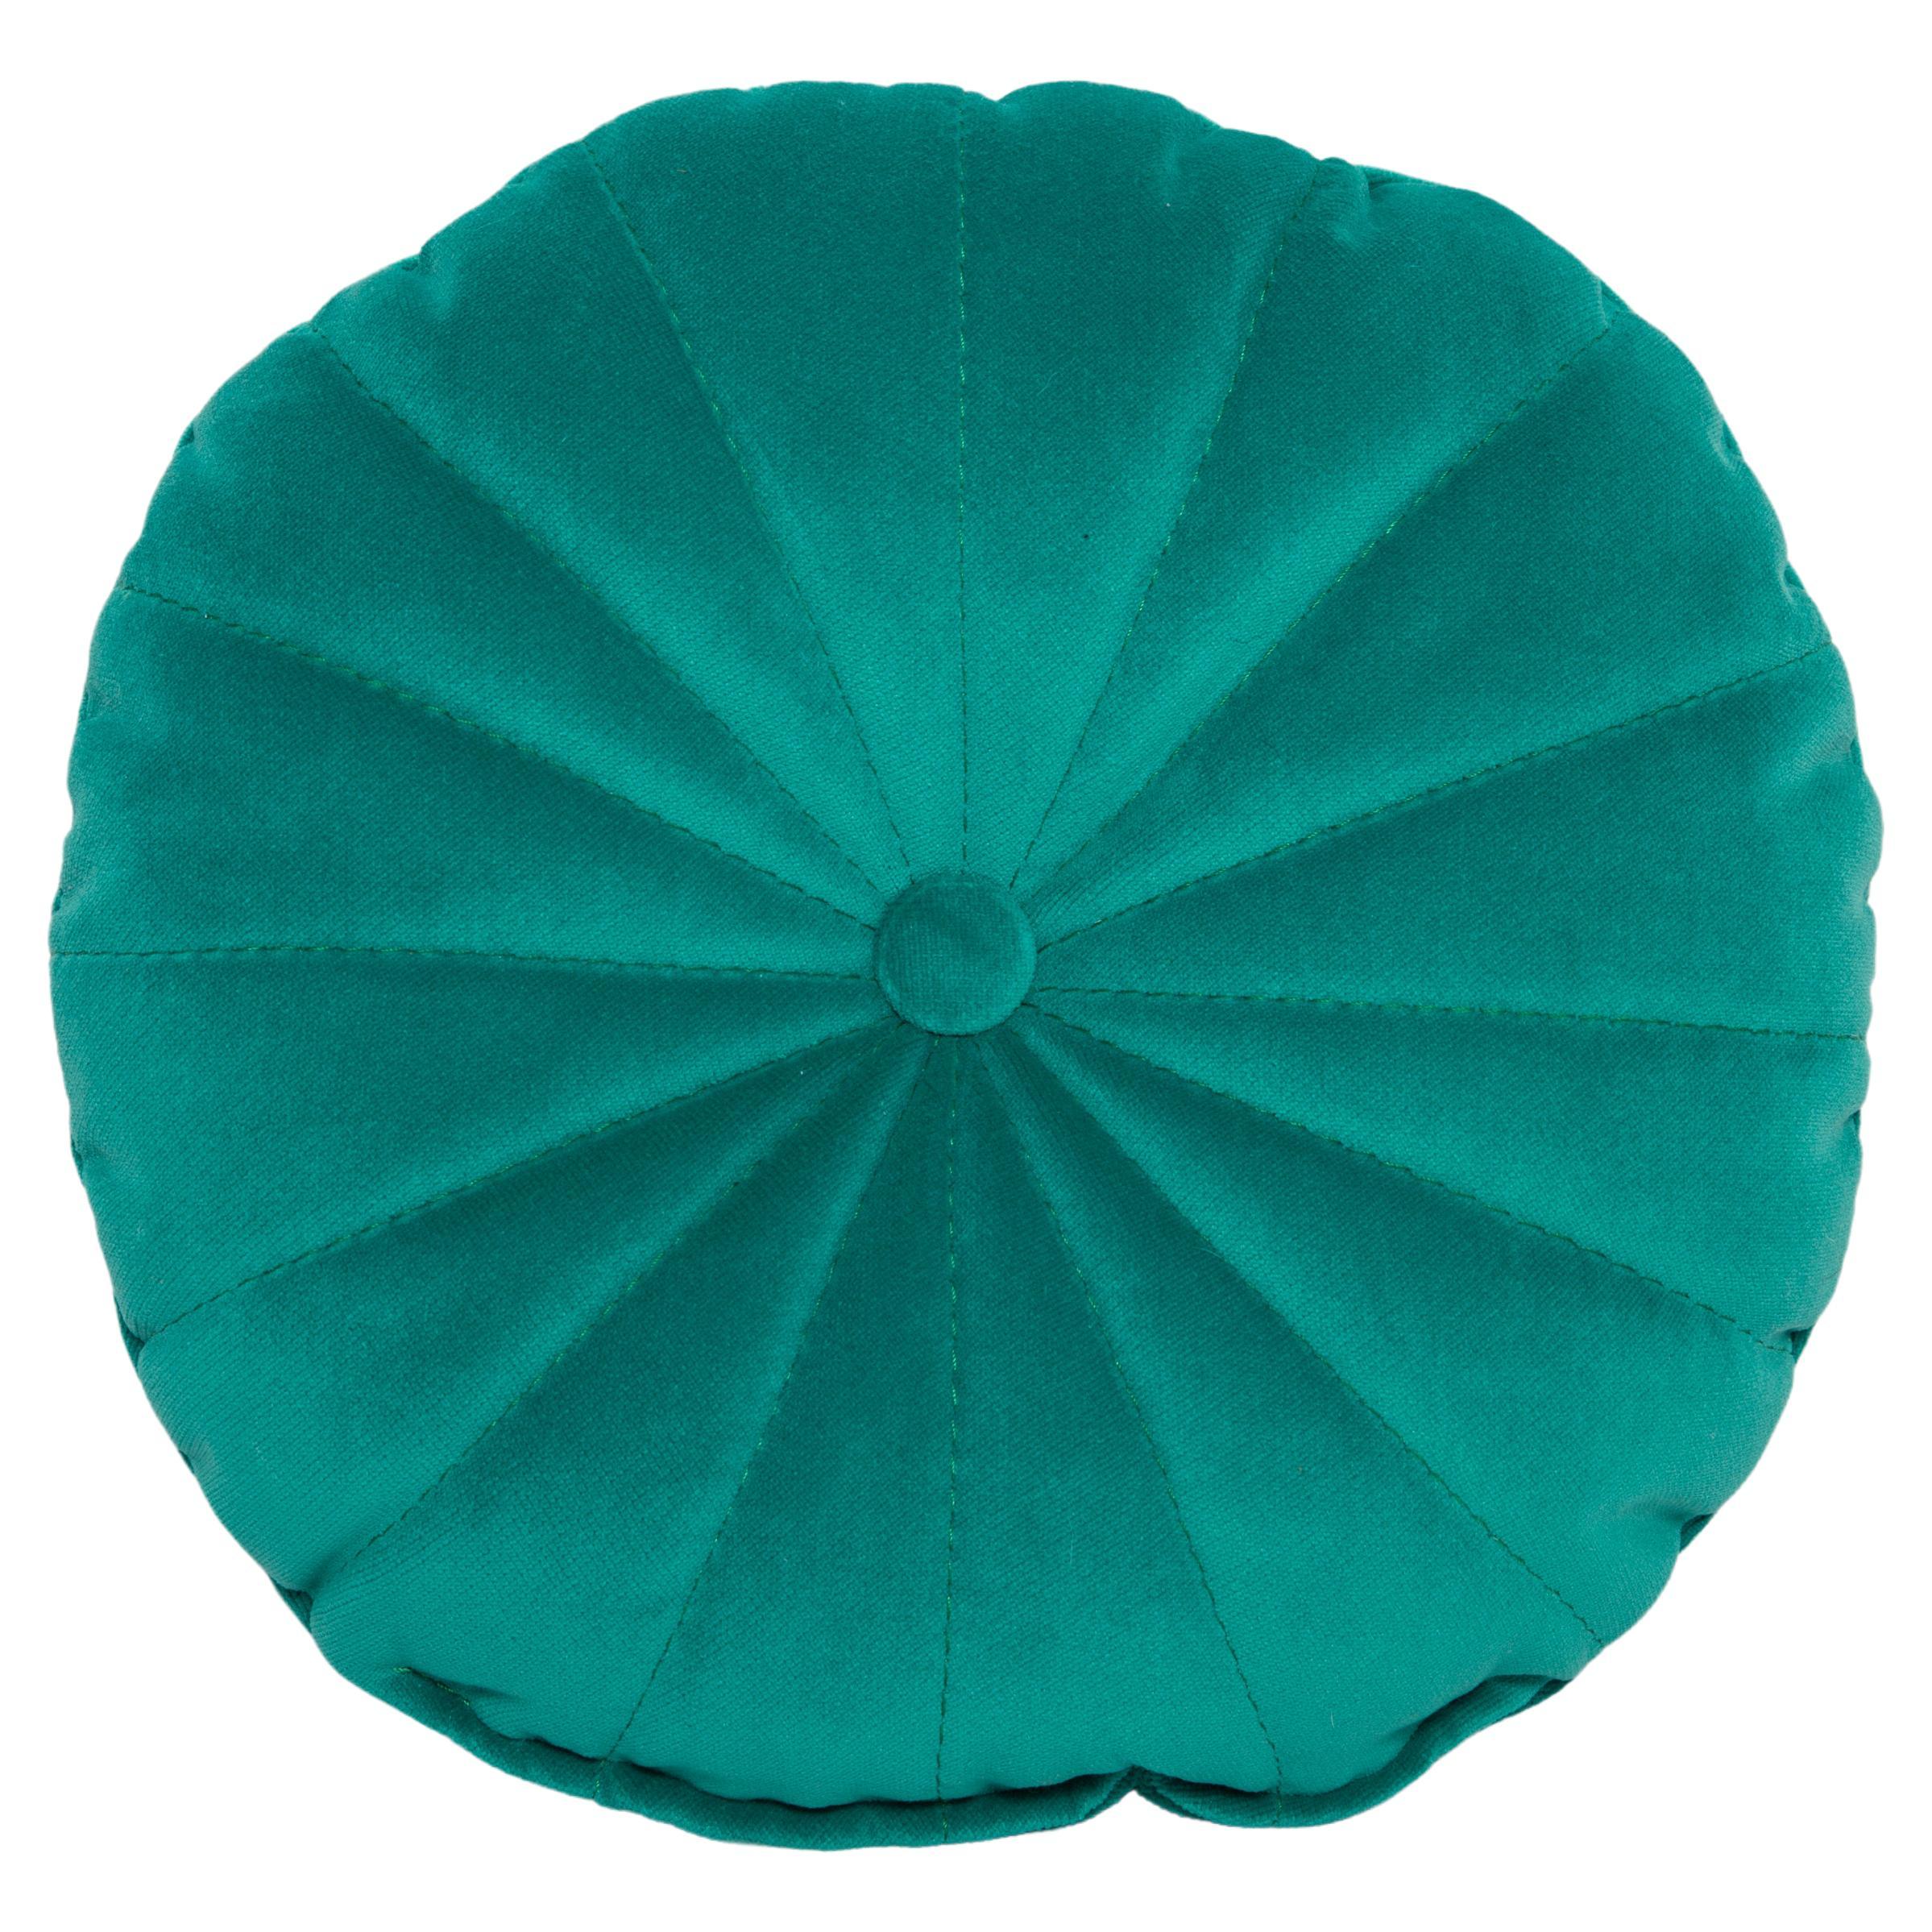 Small Contemporary Green Velvet Pillow, Vintola Studio, Europe.  For Sale